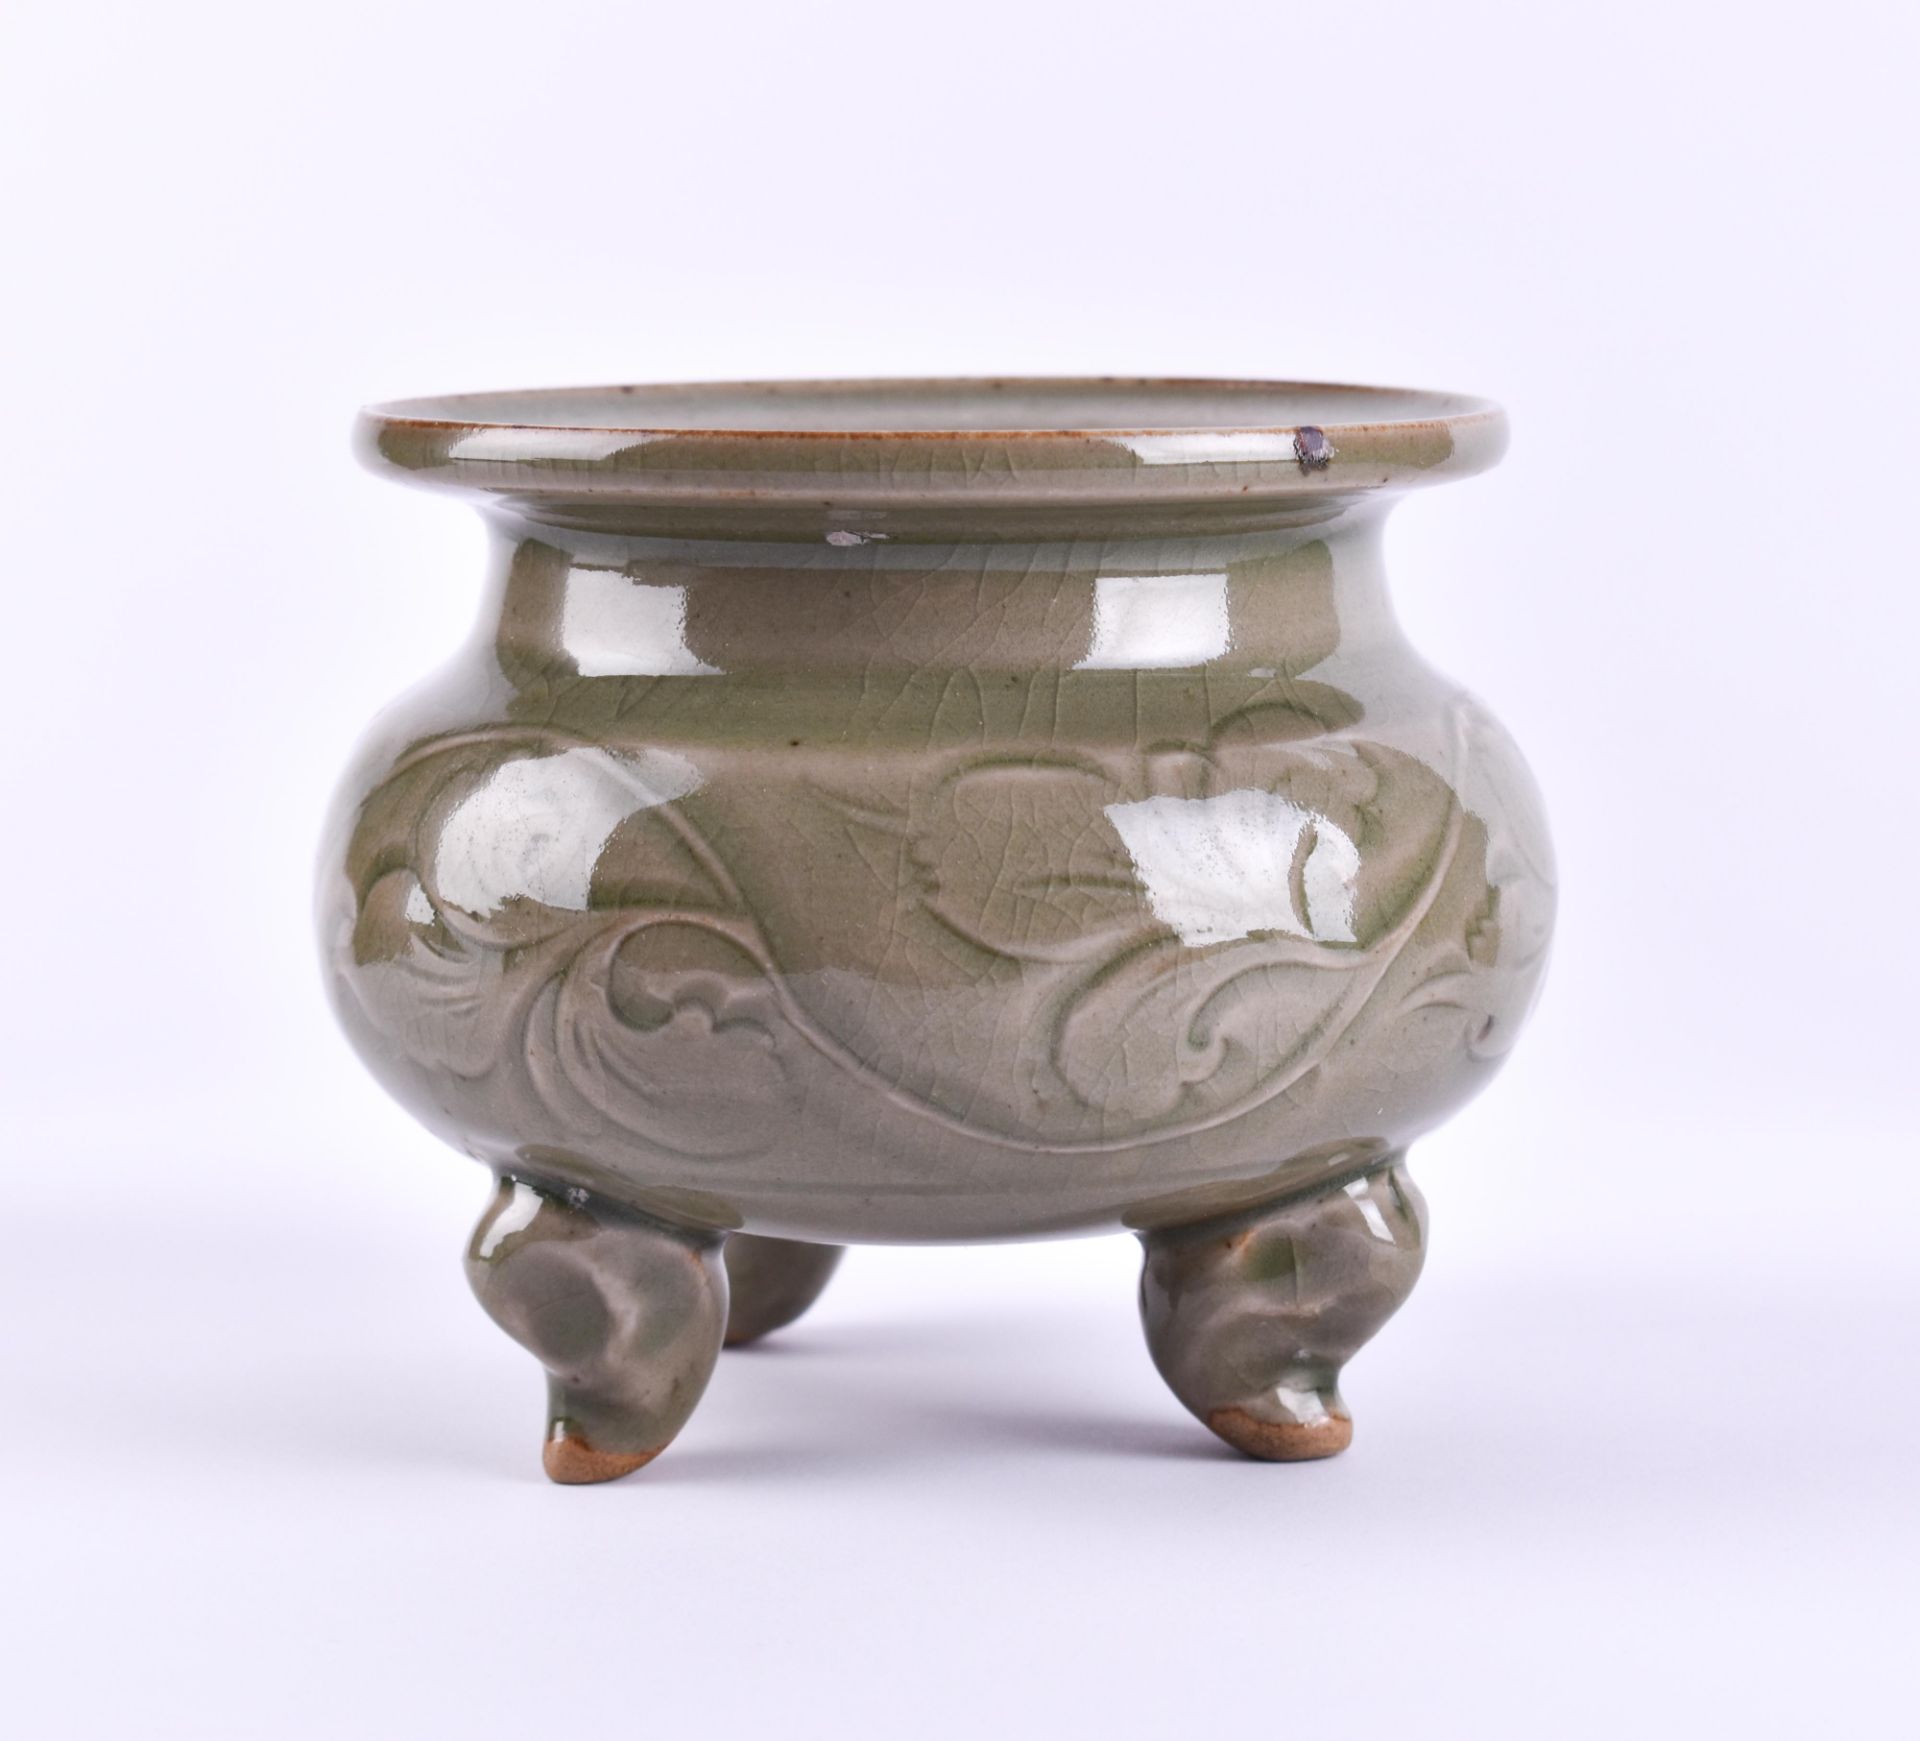 Incense burner China Ming period